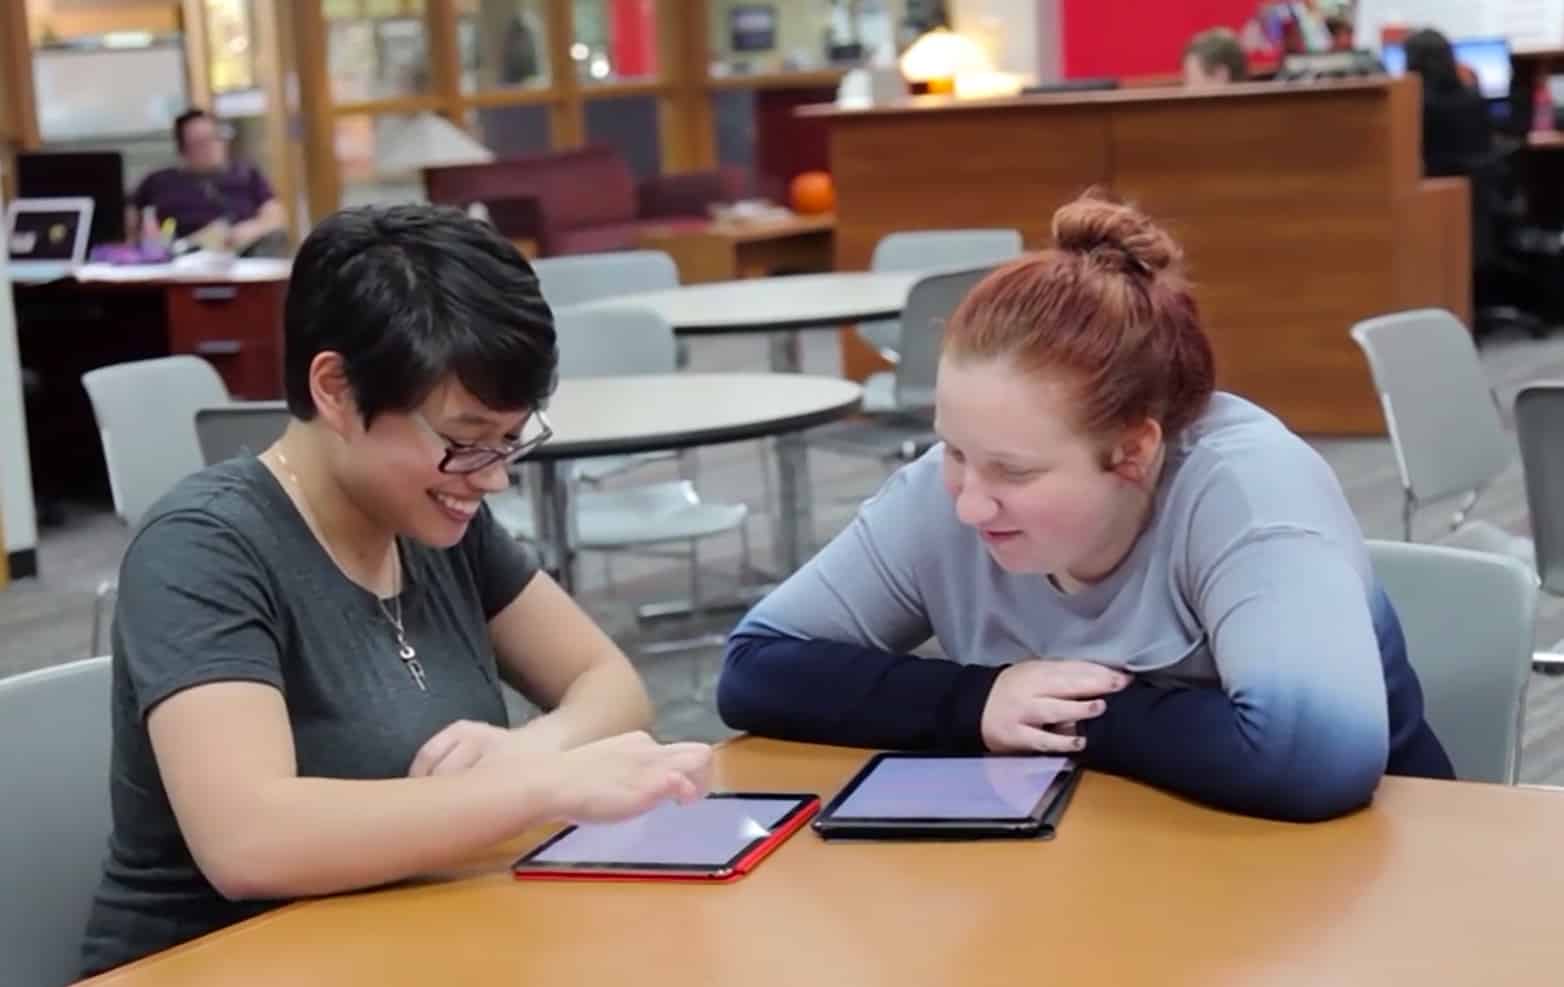 Students at Maryville University use iPads